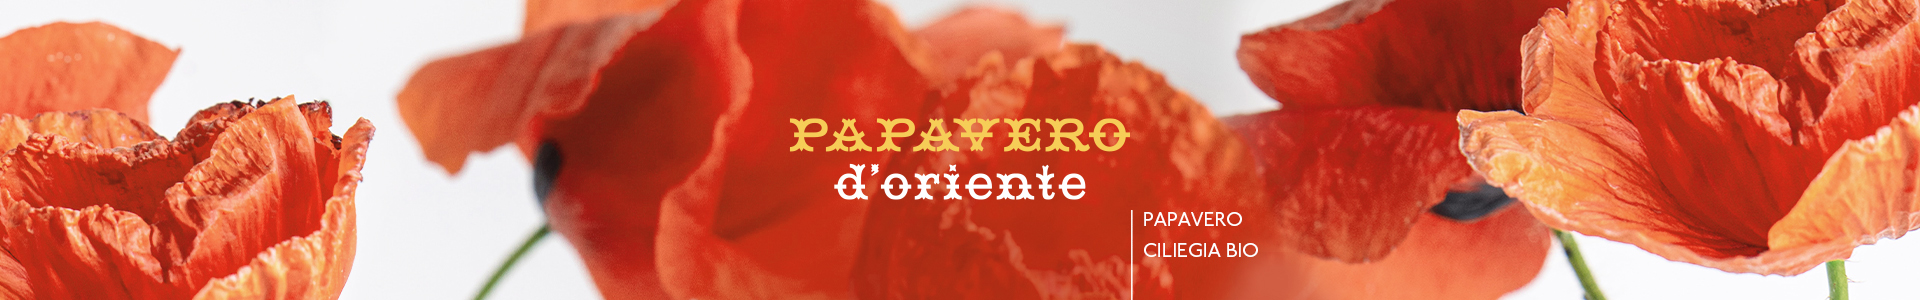 Papavero-dOriente-1920x300-010921.jpg